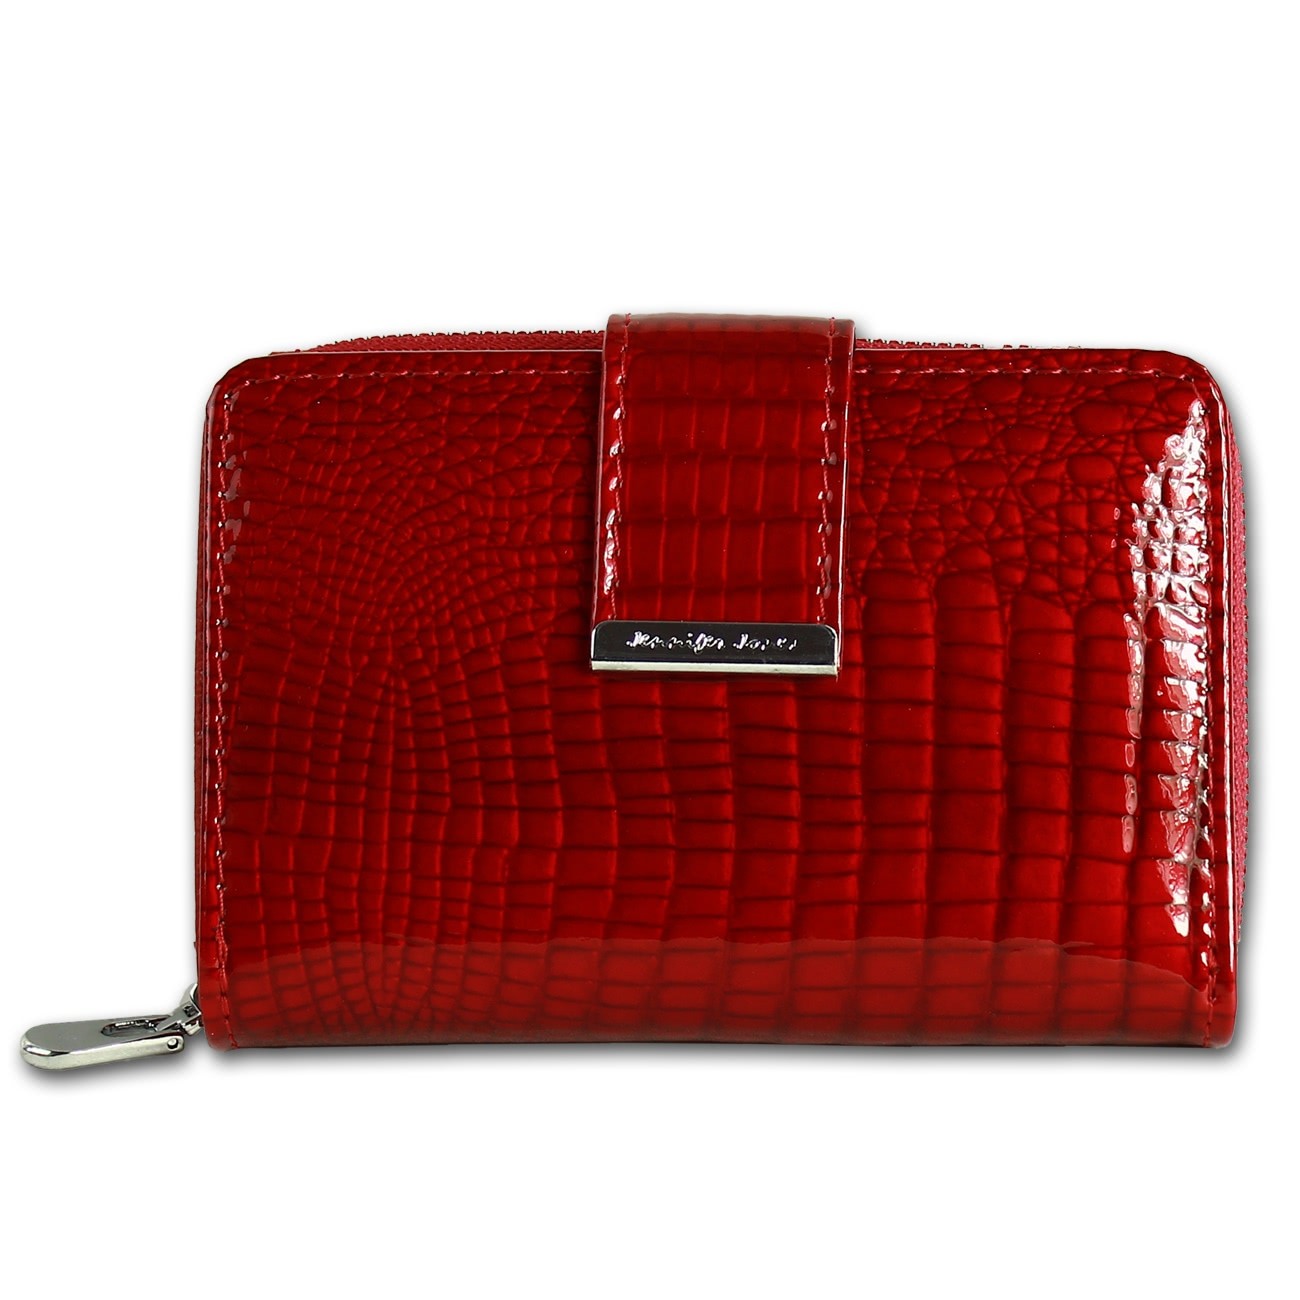 Jennifer Jones Geldbörse Portemonnaie RFID Schutz Croco Echt-Leder rot OPJ711R